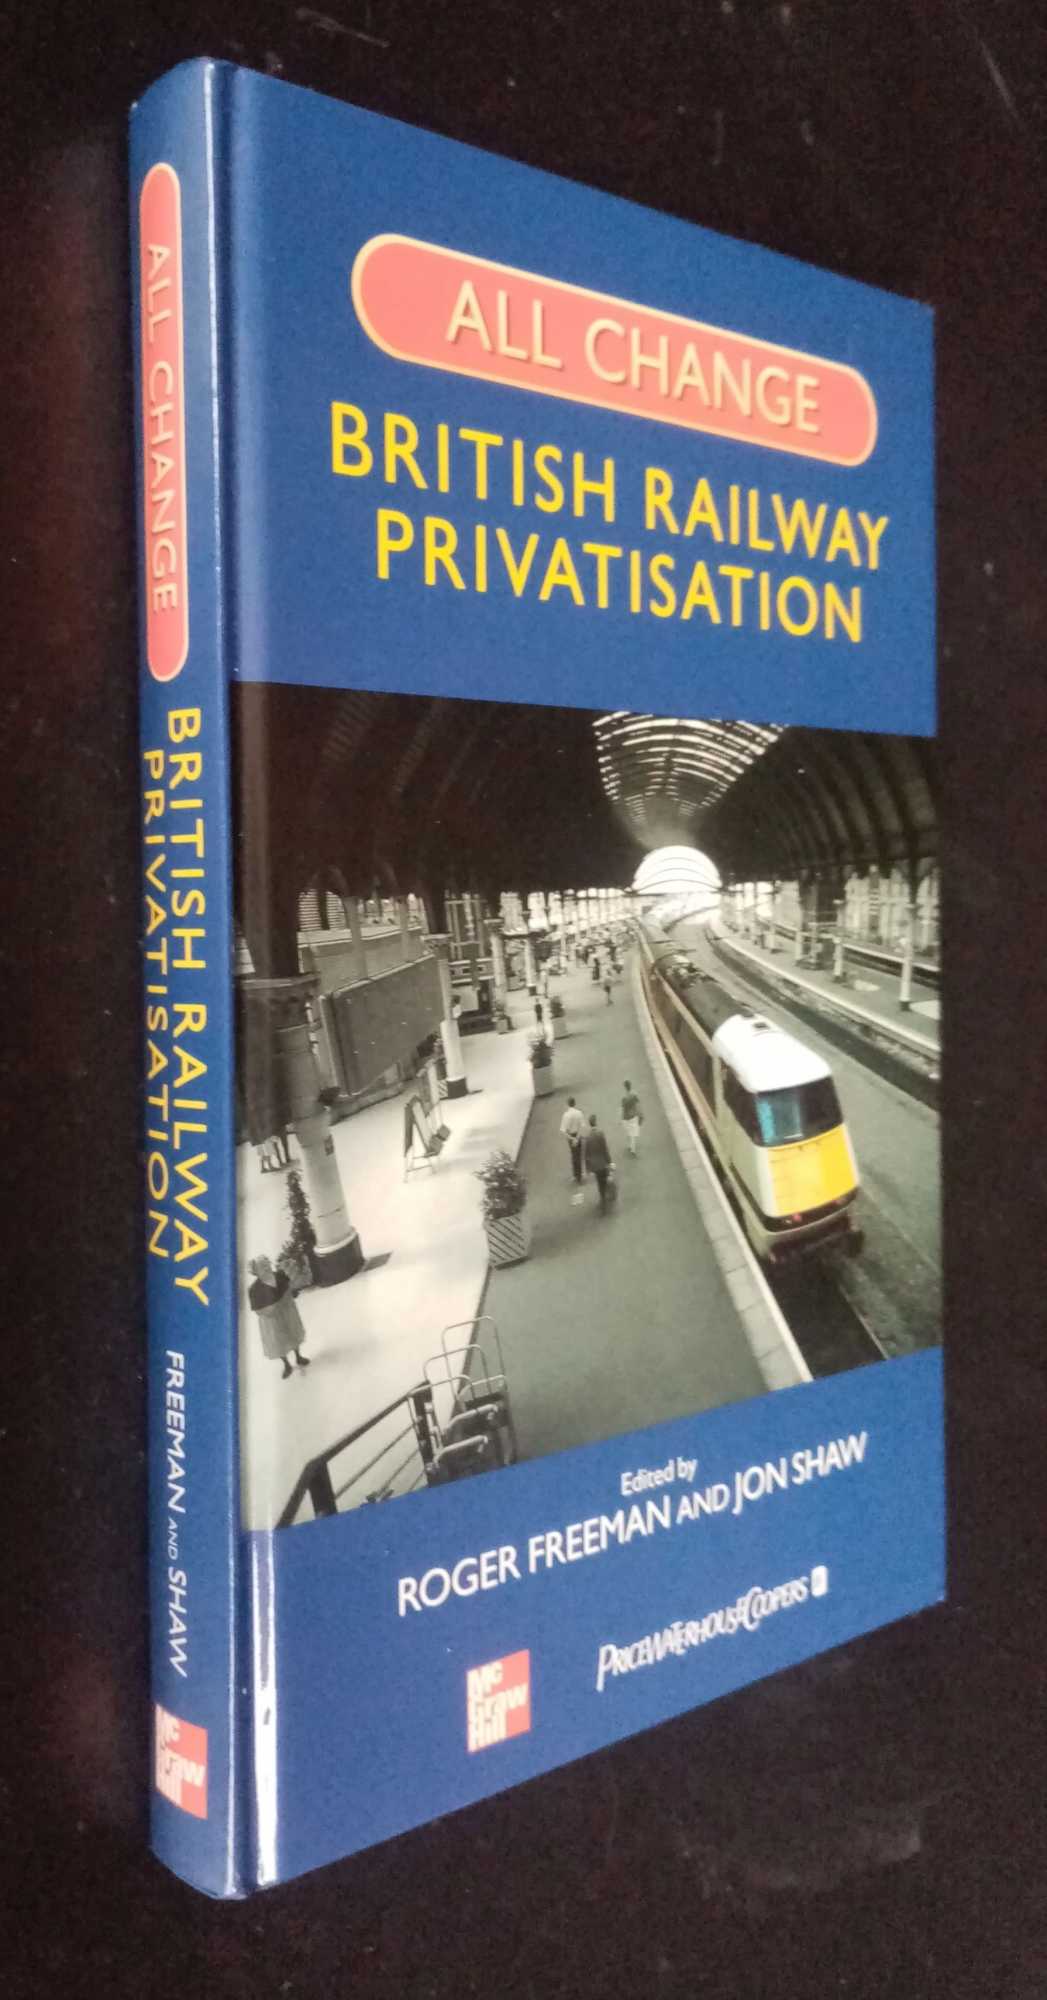 Roger Freeman, ed. - All Change: British Railway Privatisation